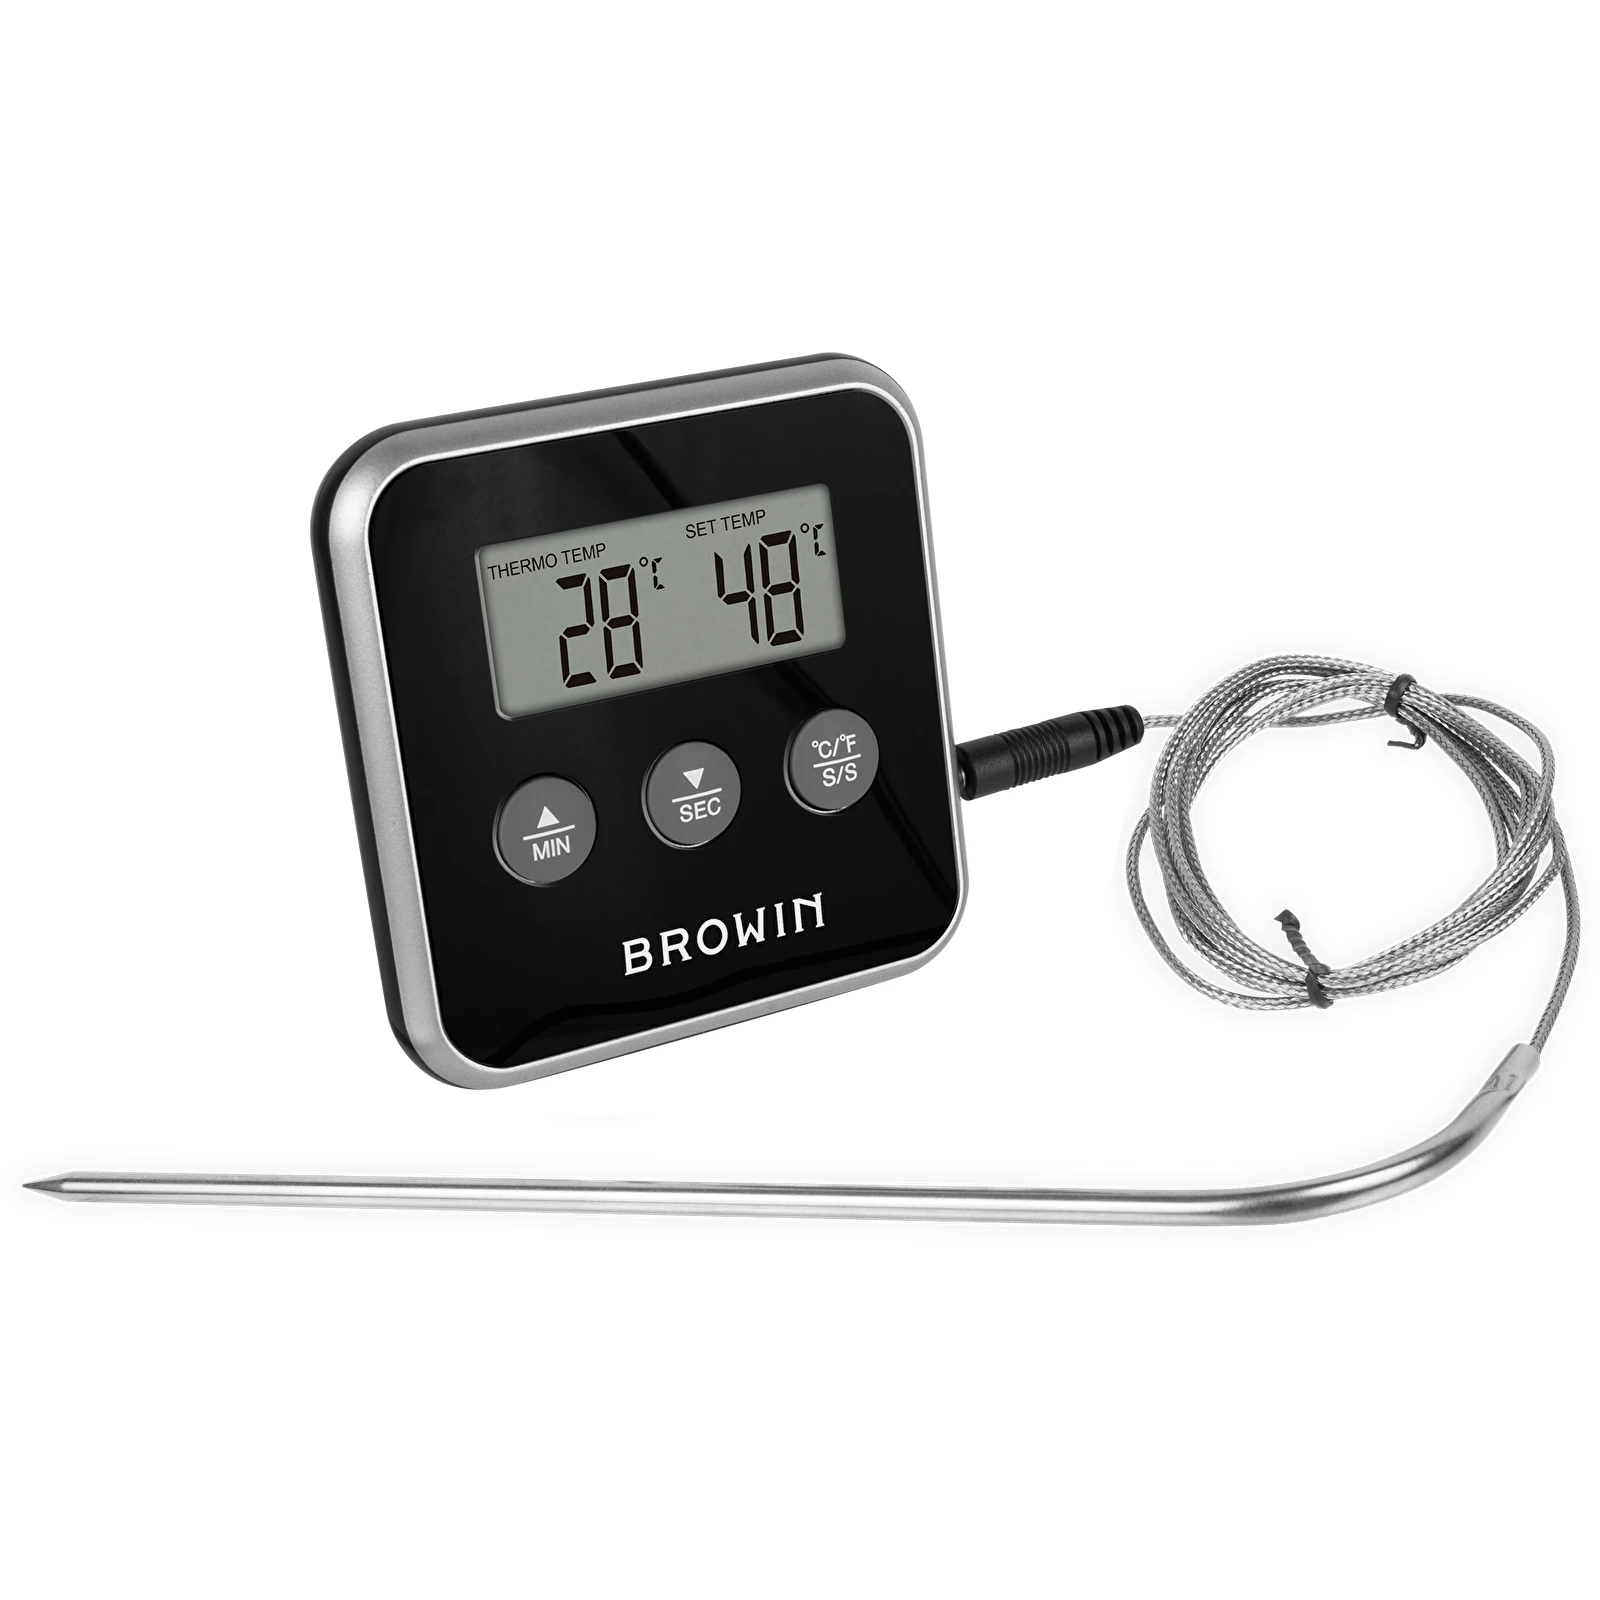 Lebensmittelthermometer mit Sonde (0°C bis 250°C) mix (küchenthermometer) -  symbol:185800